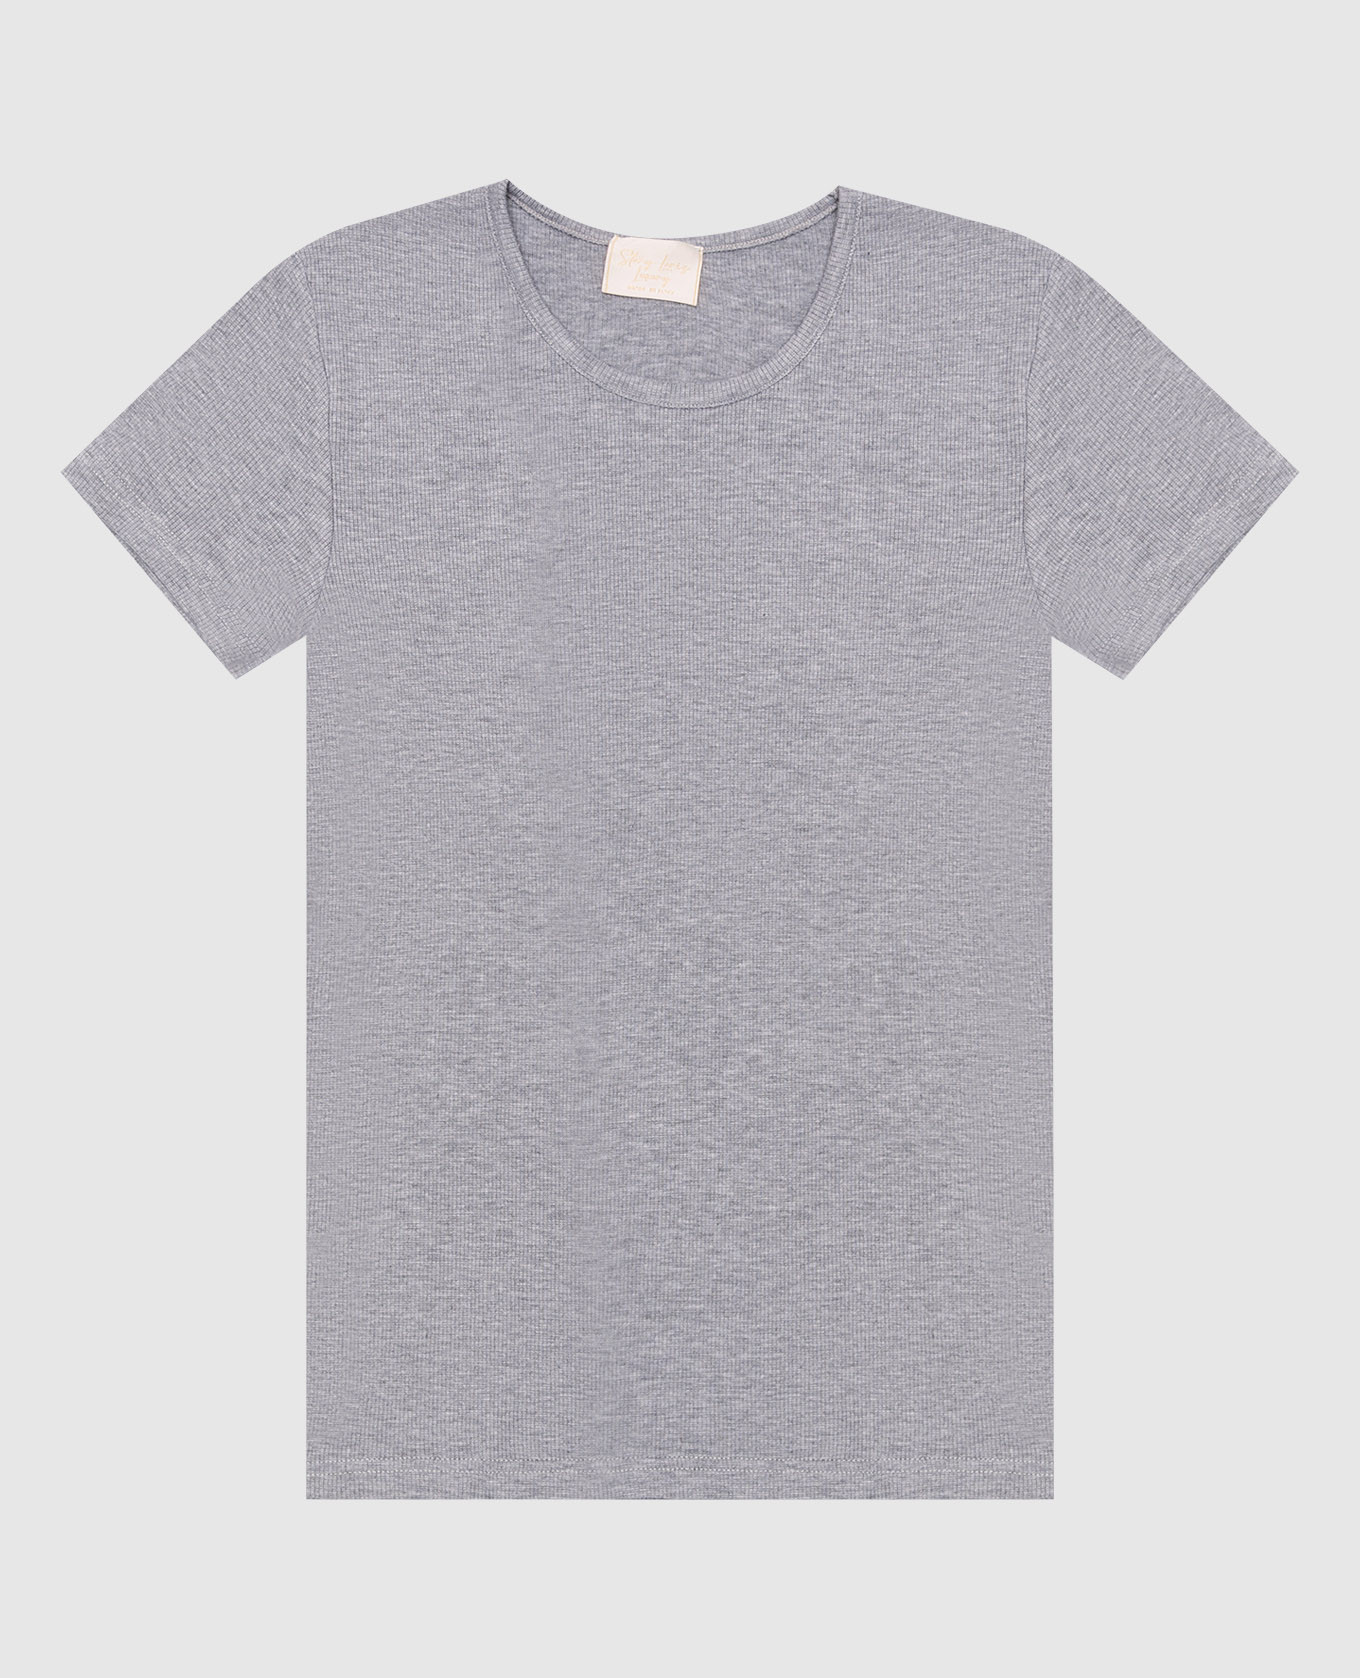 Children's gray T-shirt